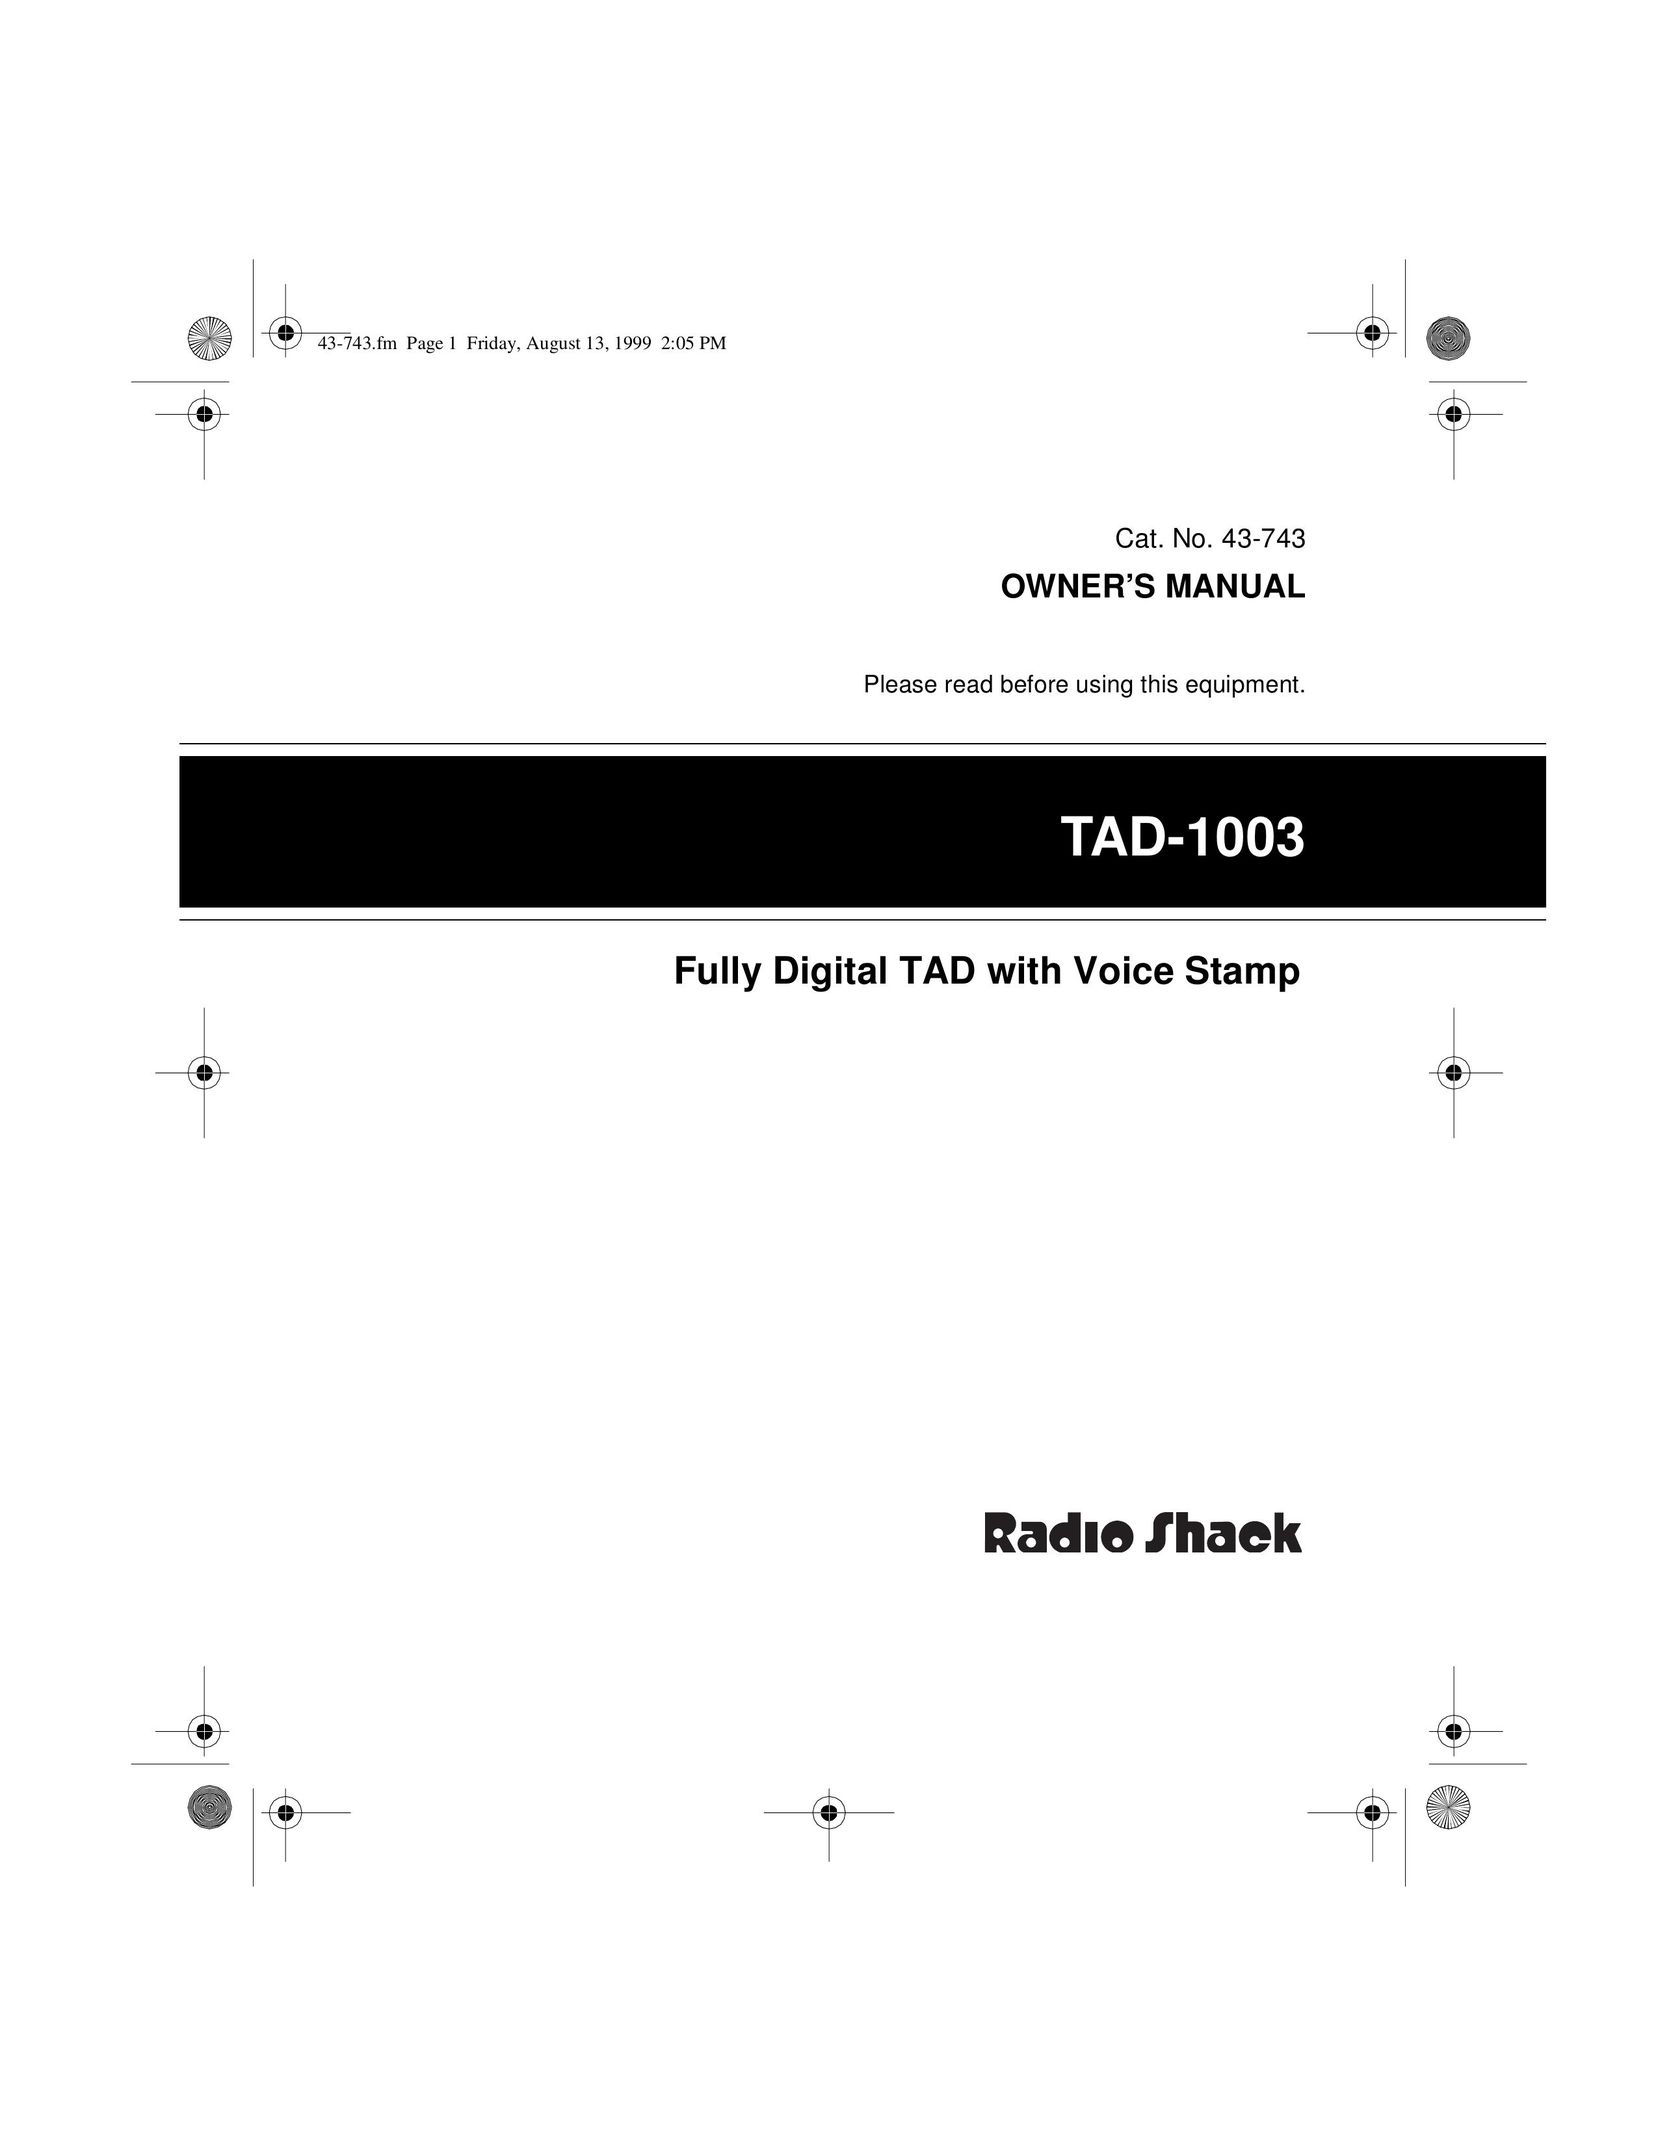 Radio Shack TAD-1003 Answering Machine User Manual